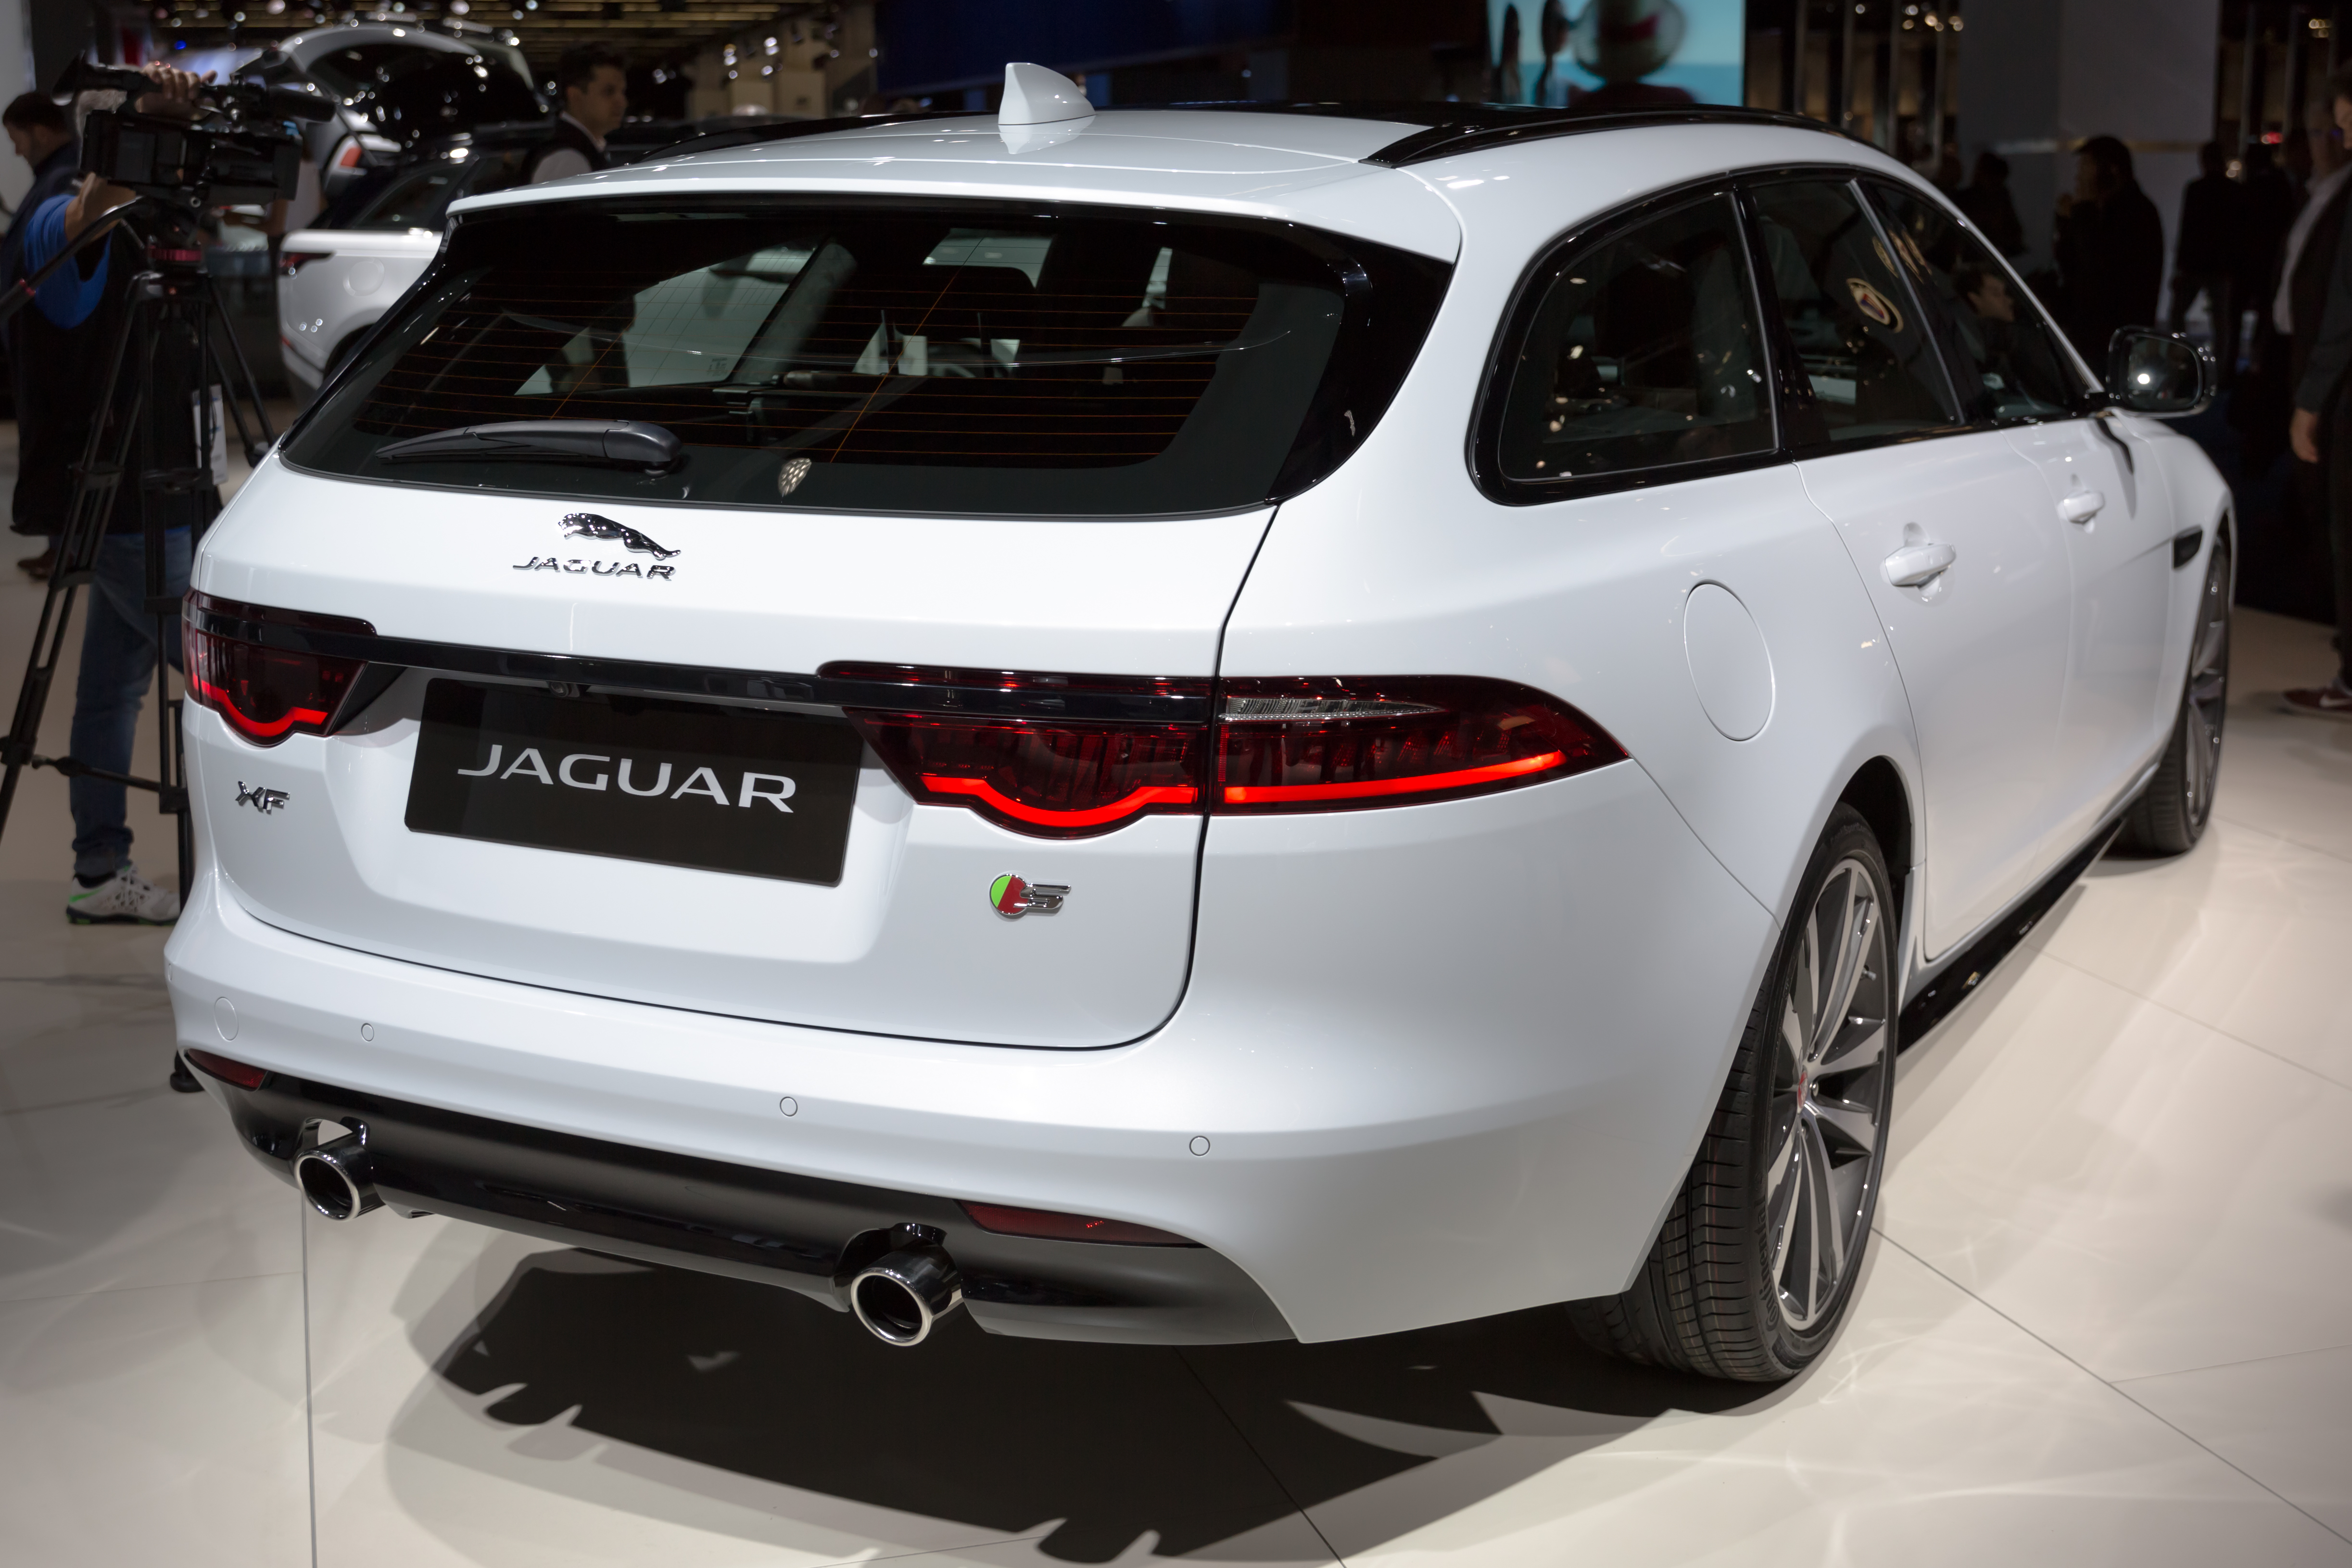 Jaguar XF Sportbrake exterior restyling